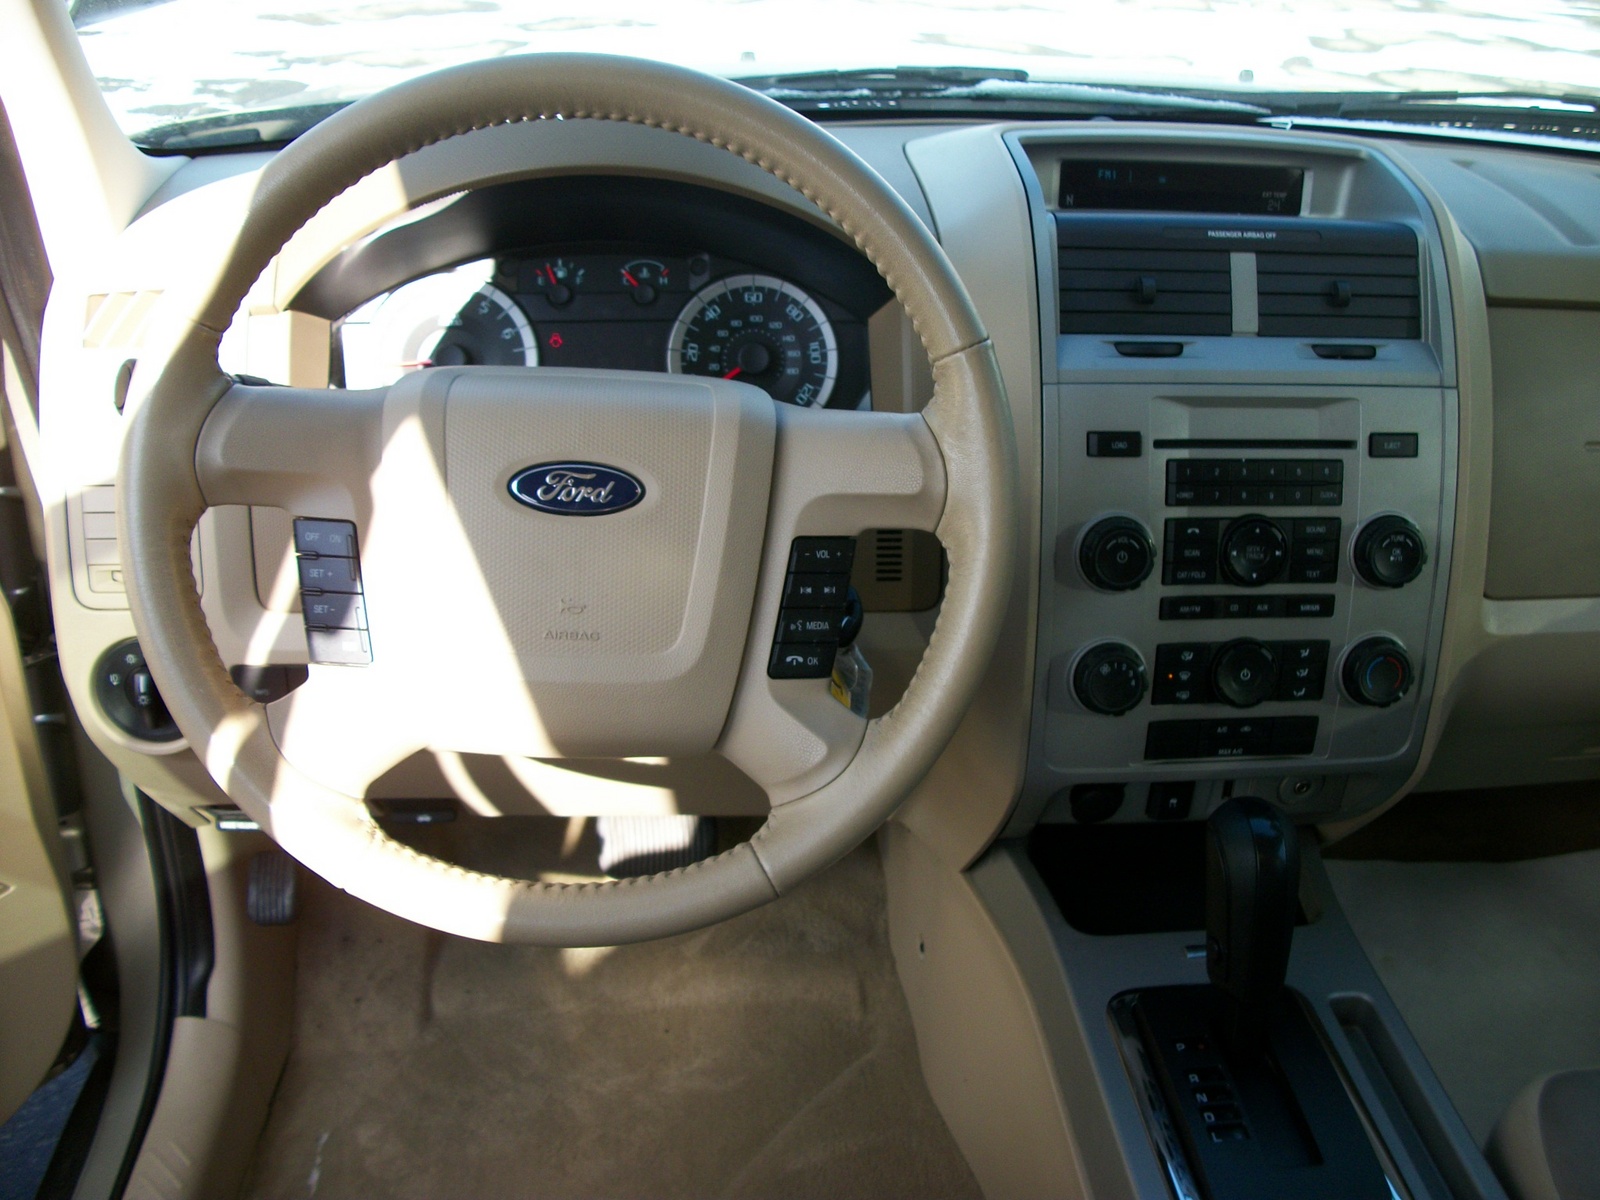 2010 Ford escape xlt interior colors #3